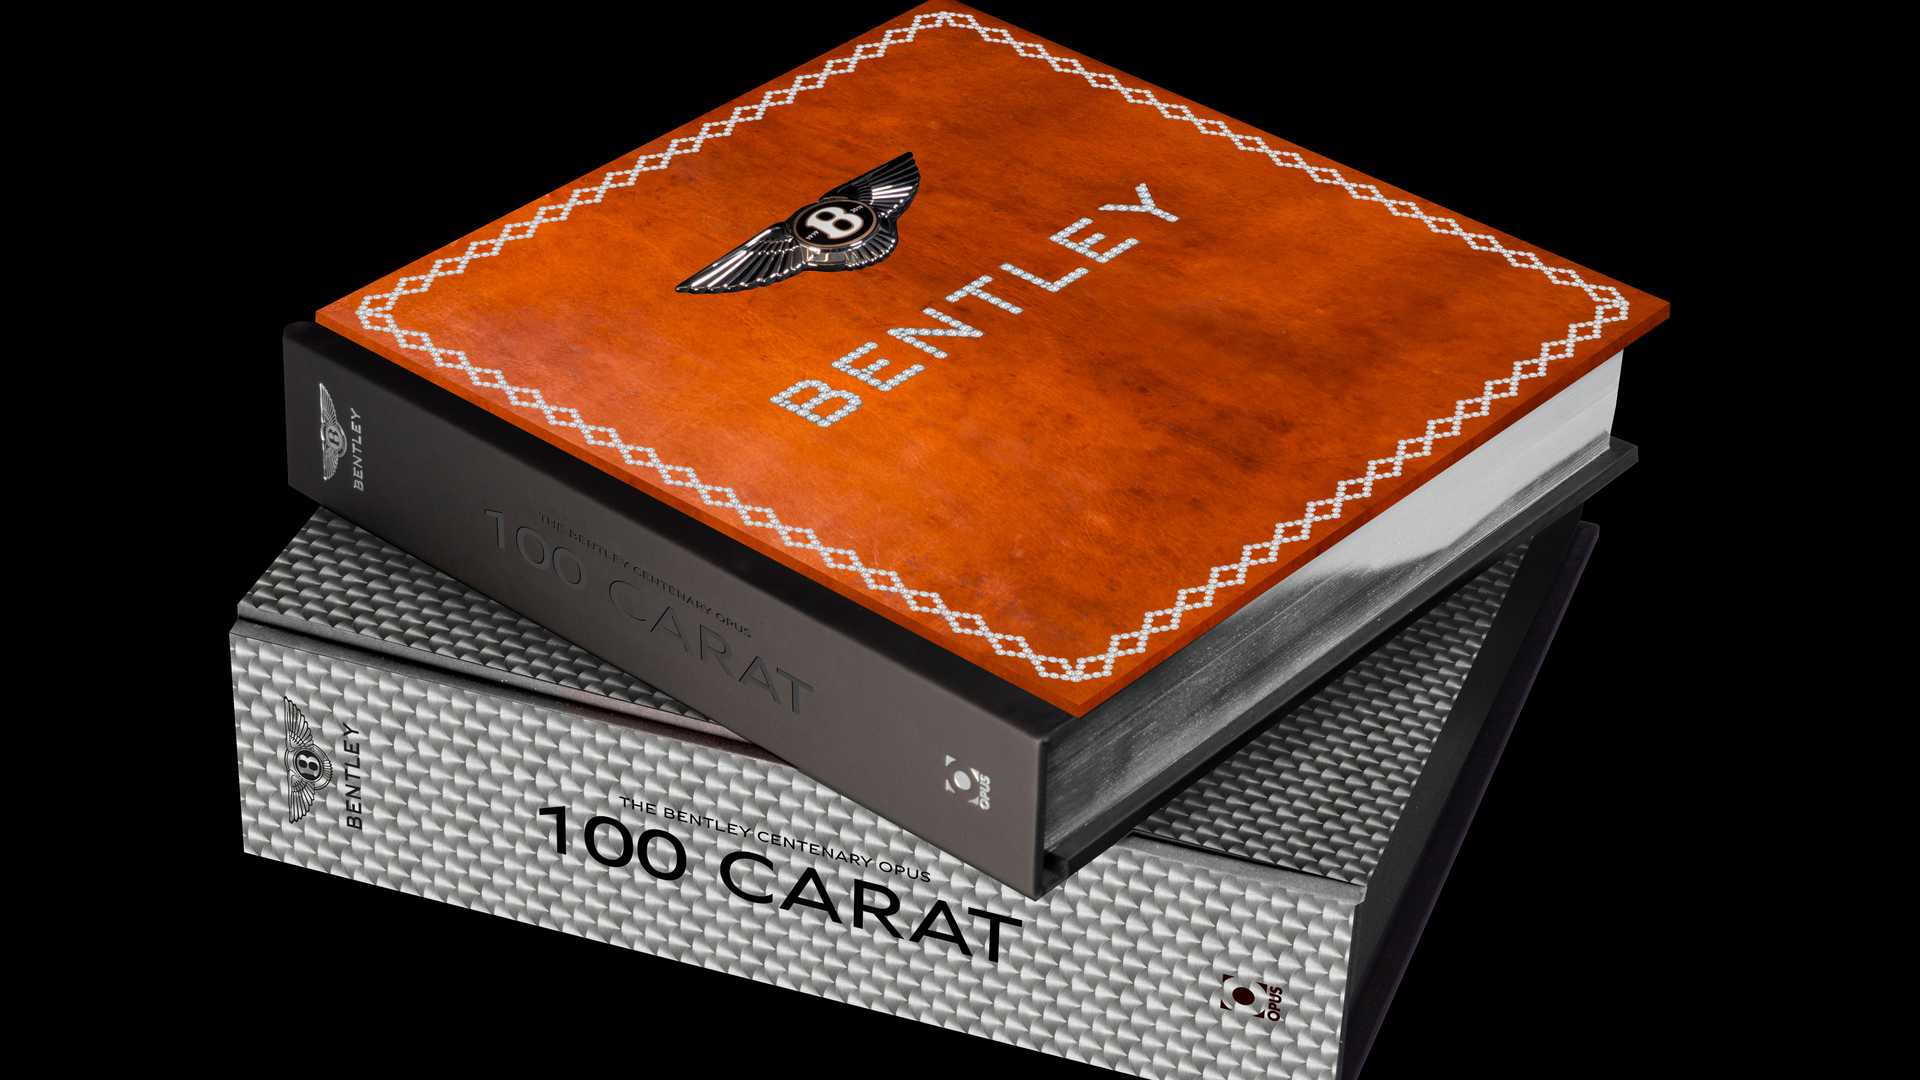 "The Bentley Centenary Opus" Carat Edition